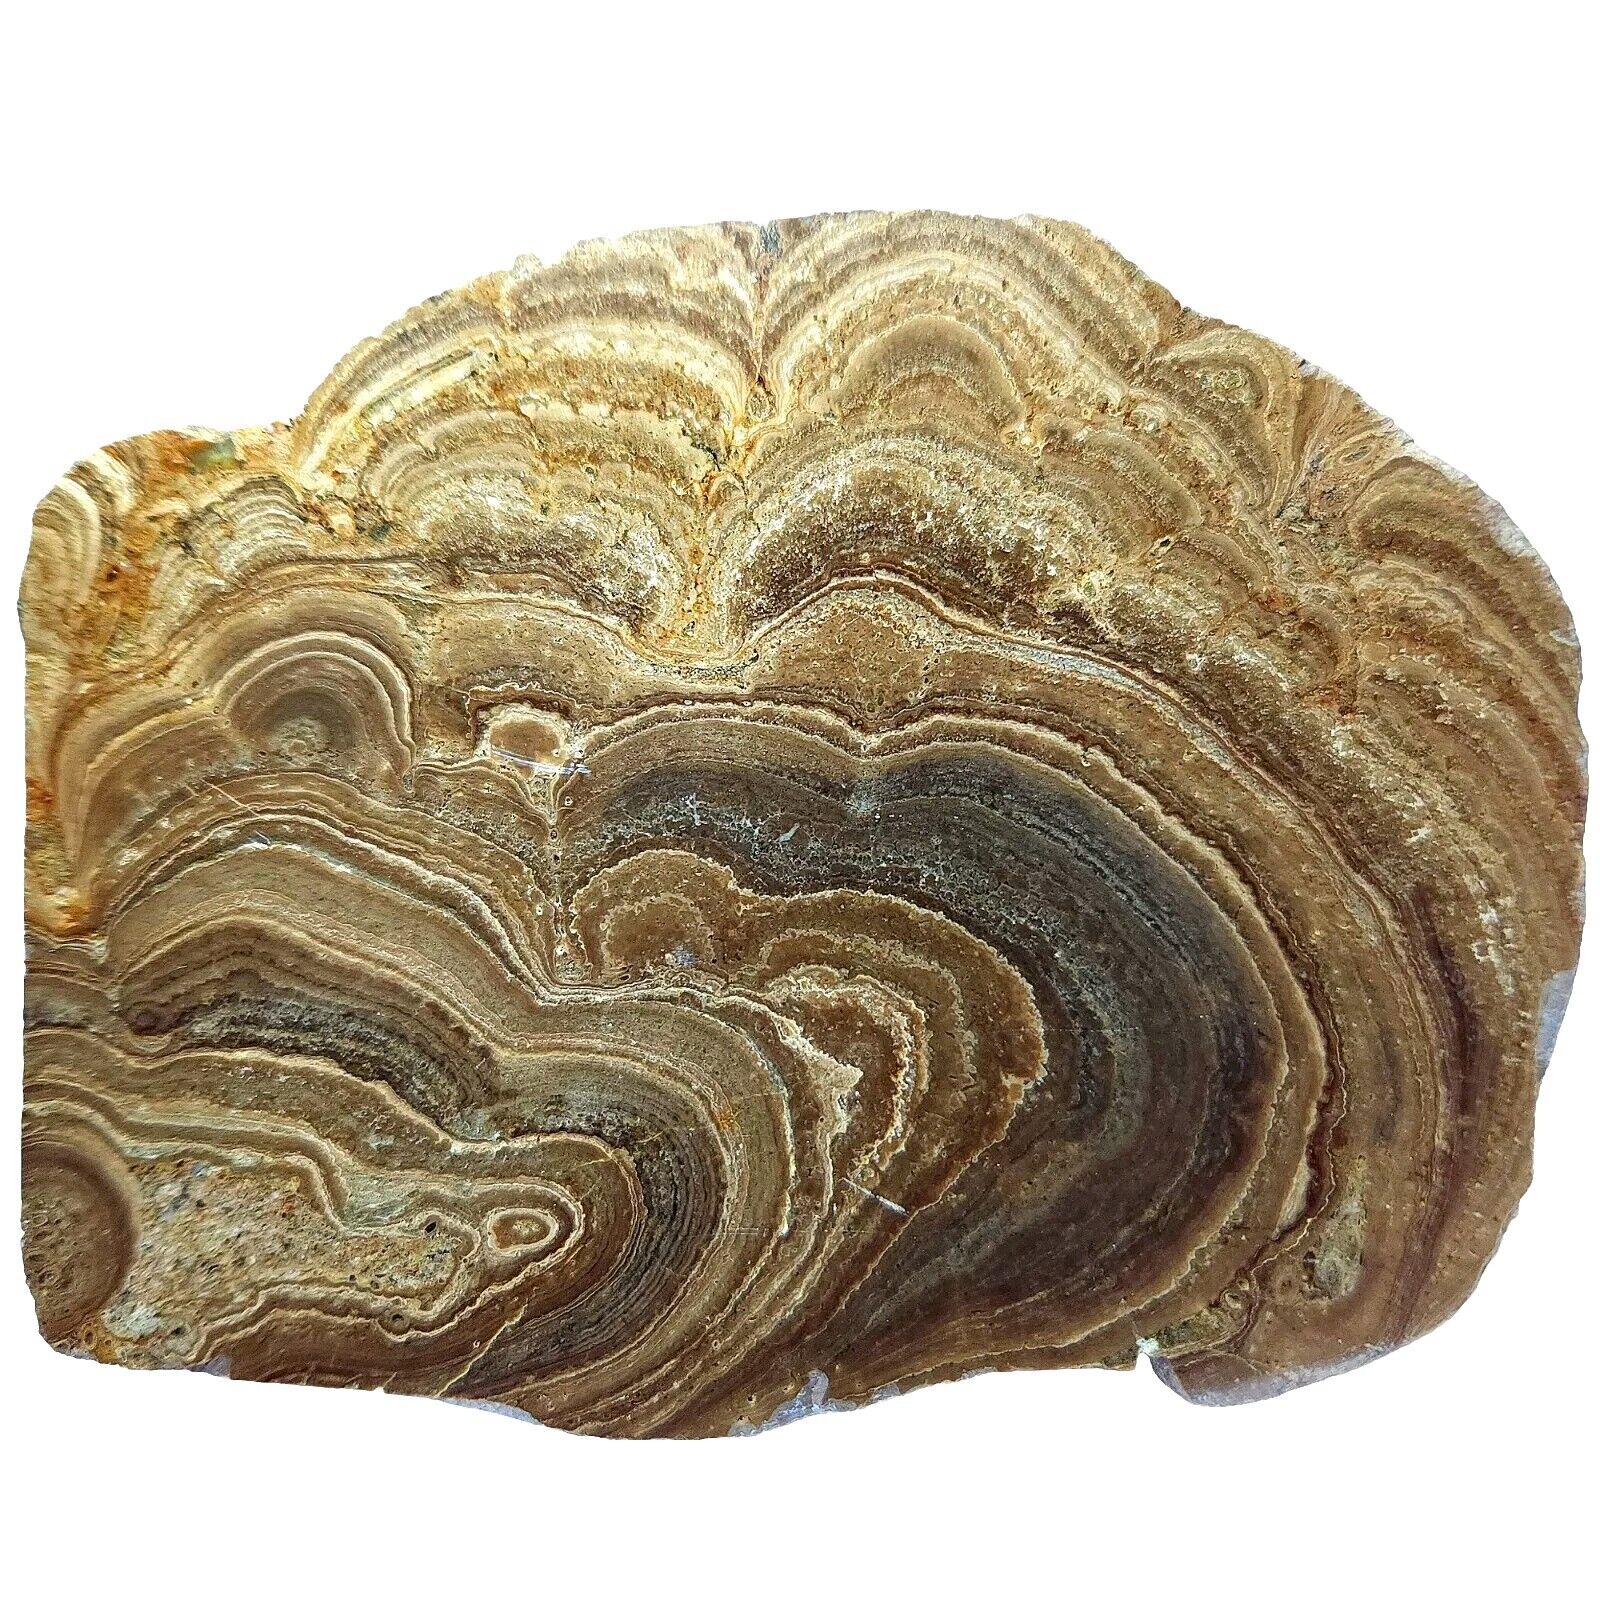 Rare Polished Stromatolite Fossil, Miocene Age, Los Angeles County, USA, 340g